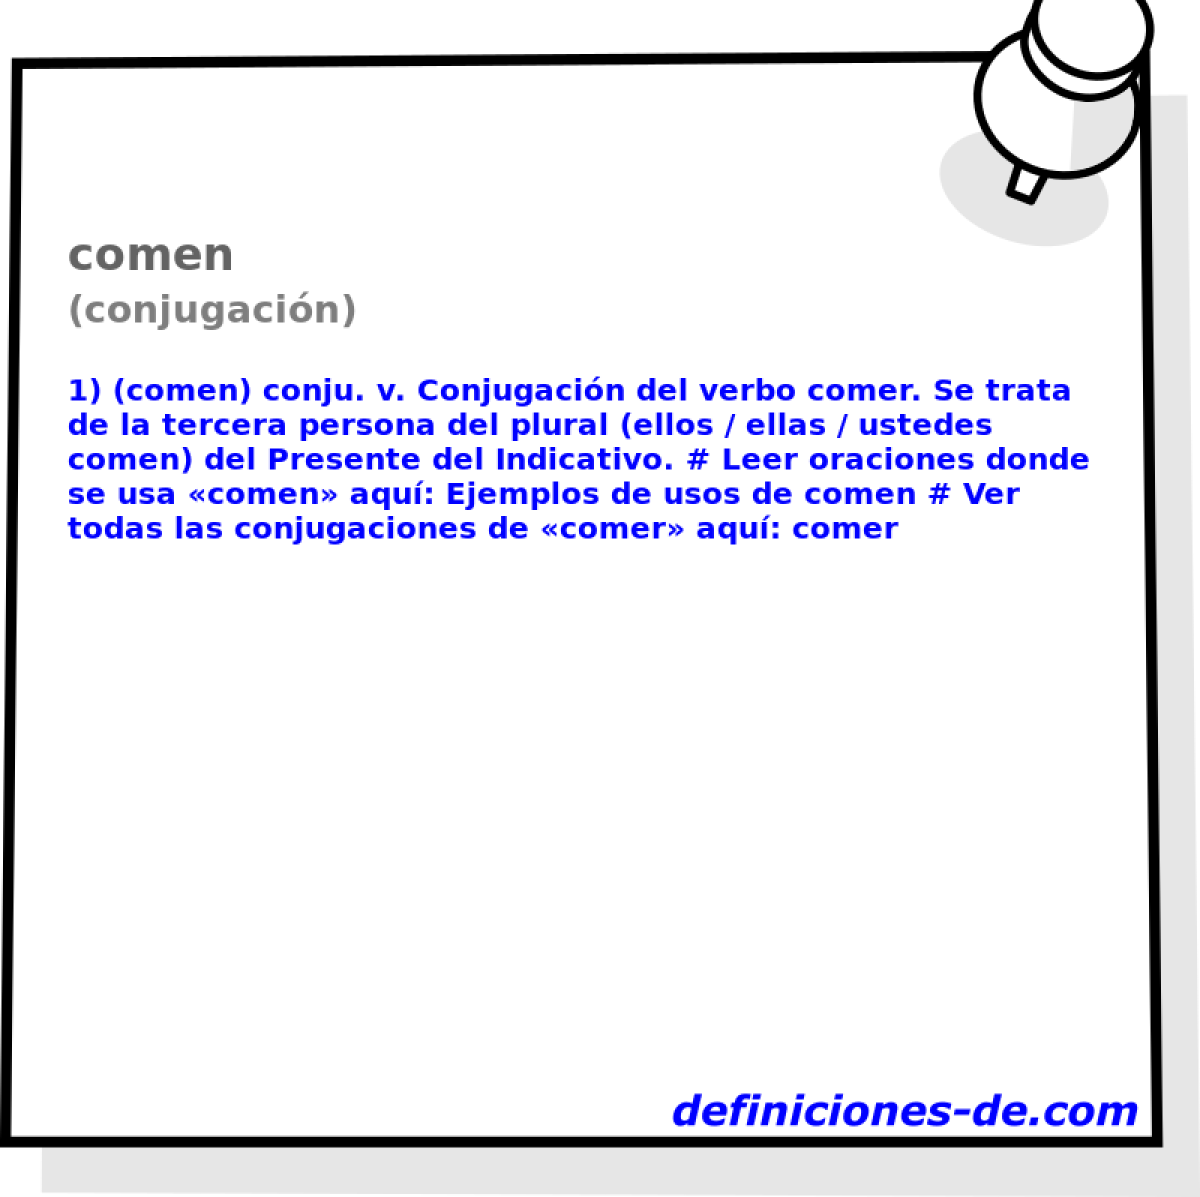 comen (conjugacin)